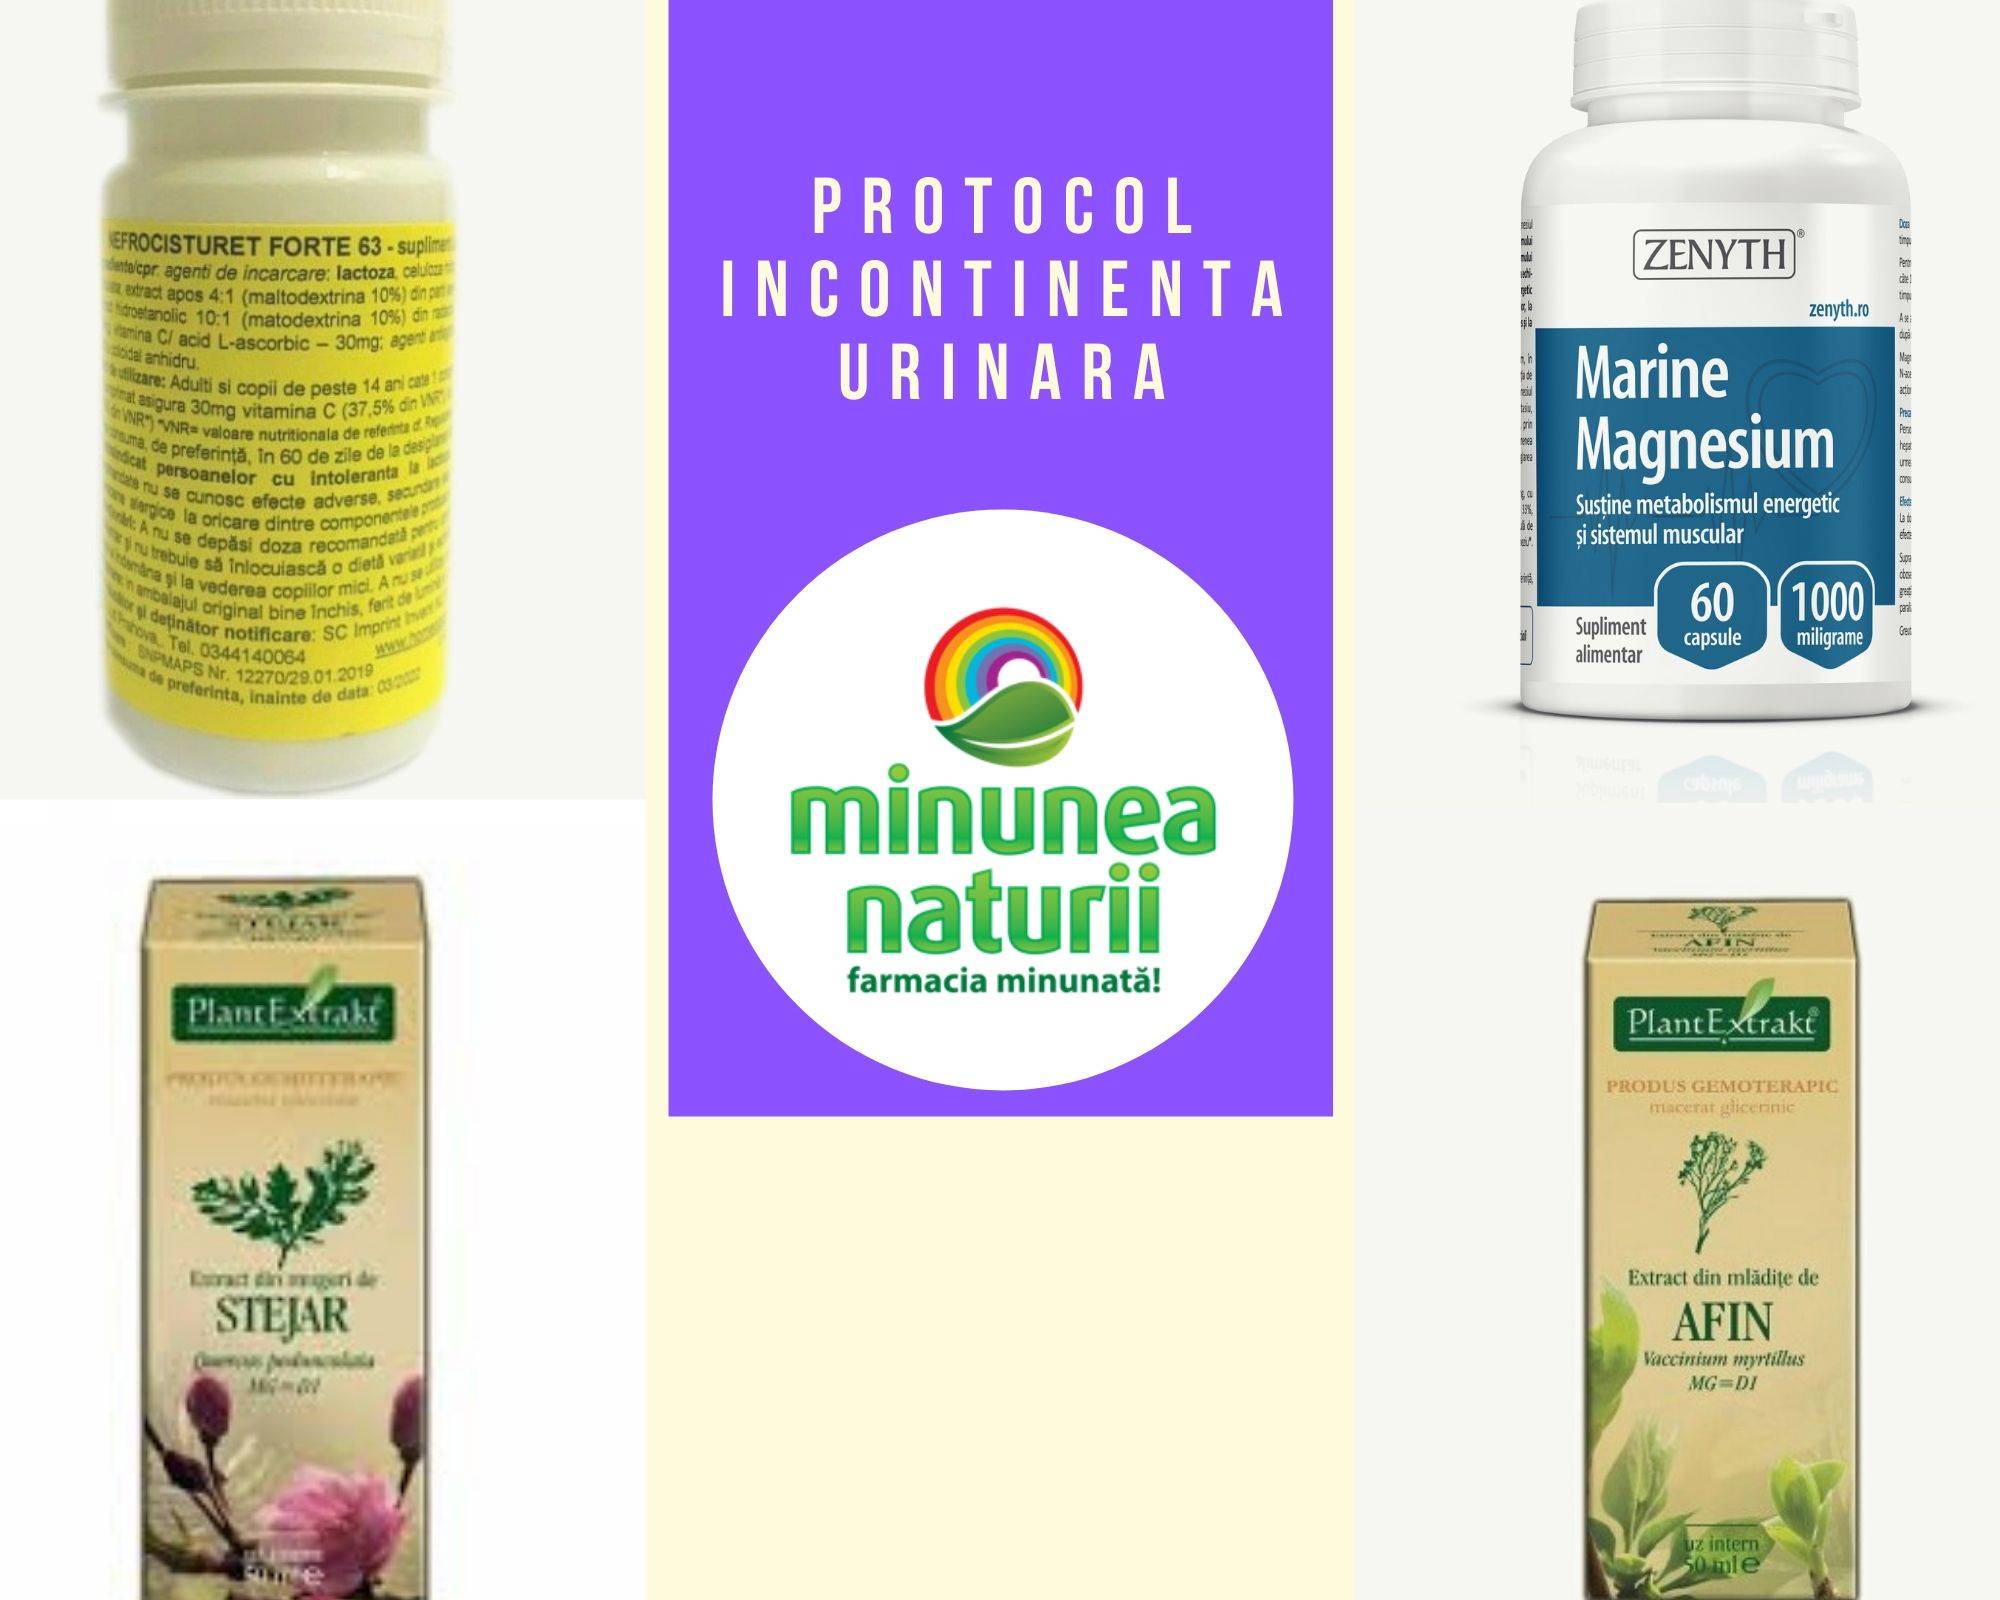 Incontinenta urinara - protocol tratament natural